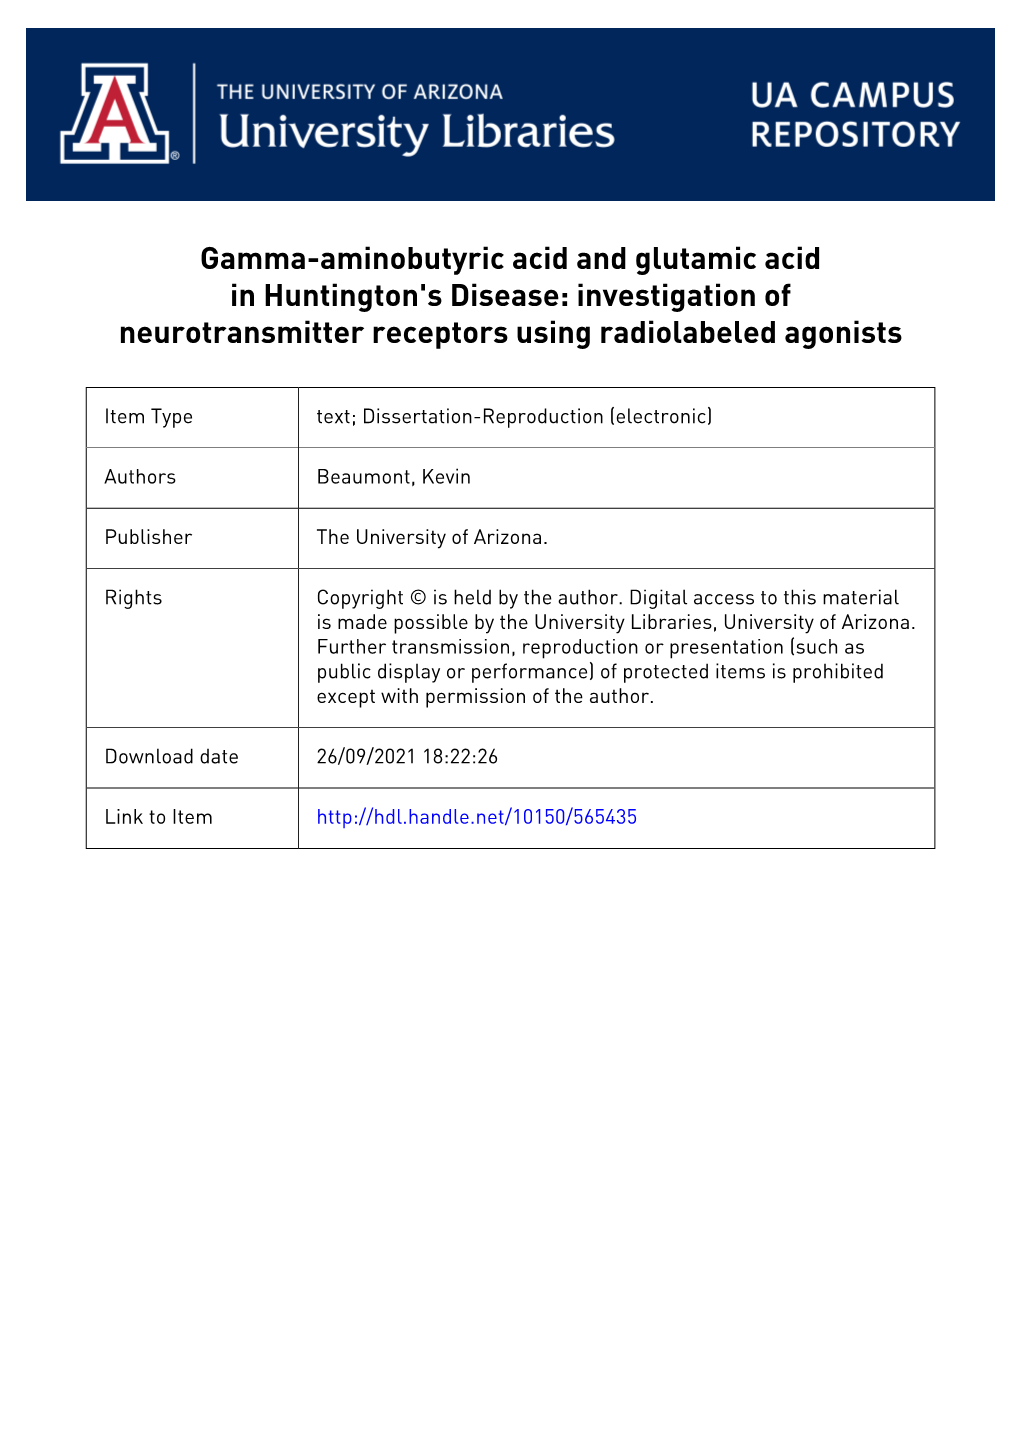 Gamma-Aminobutyric Acid and Glutamic Acid in Huntington's Disease: Investigation of Neurotransmitter Receptors Using Radiolabeled Agonists